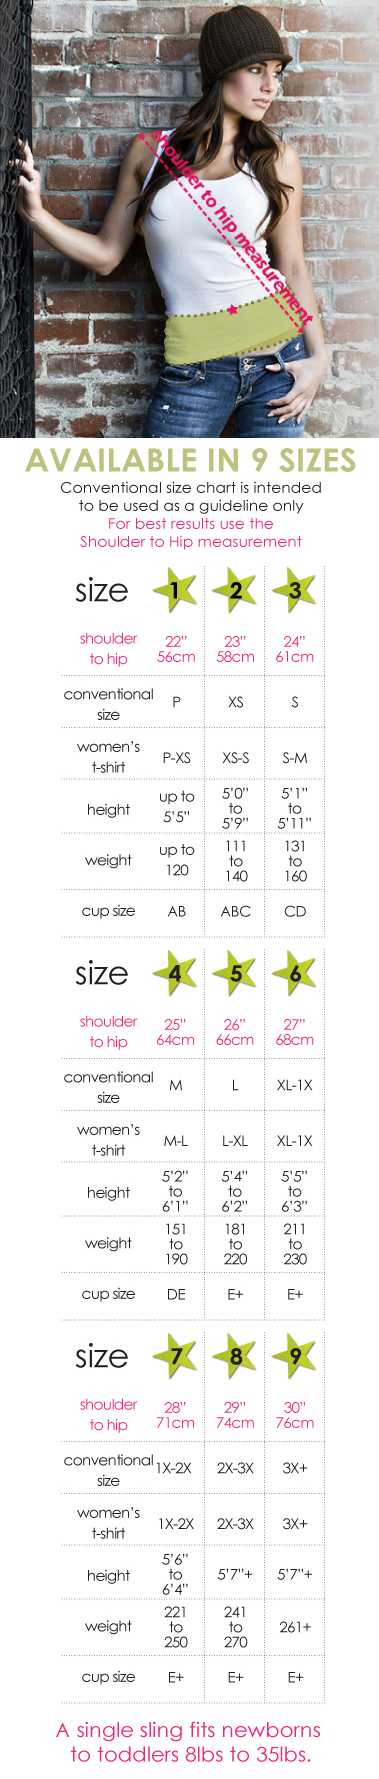 baby sling sizes